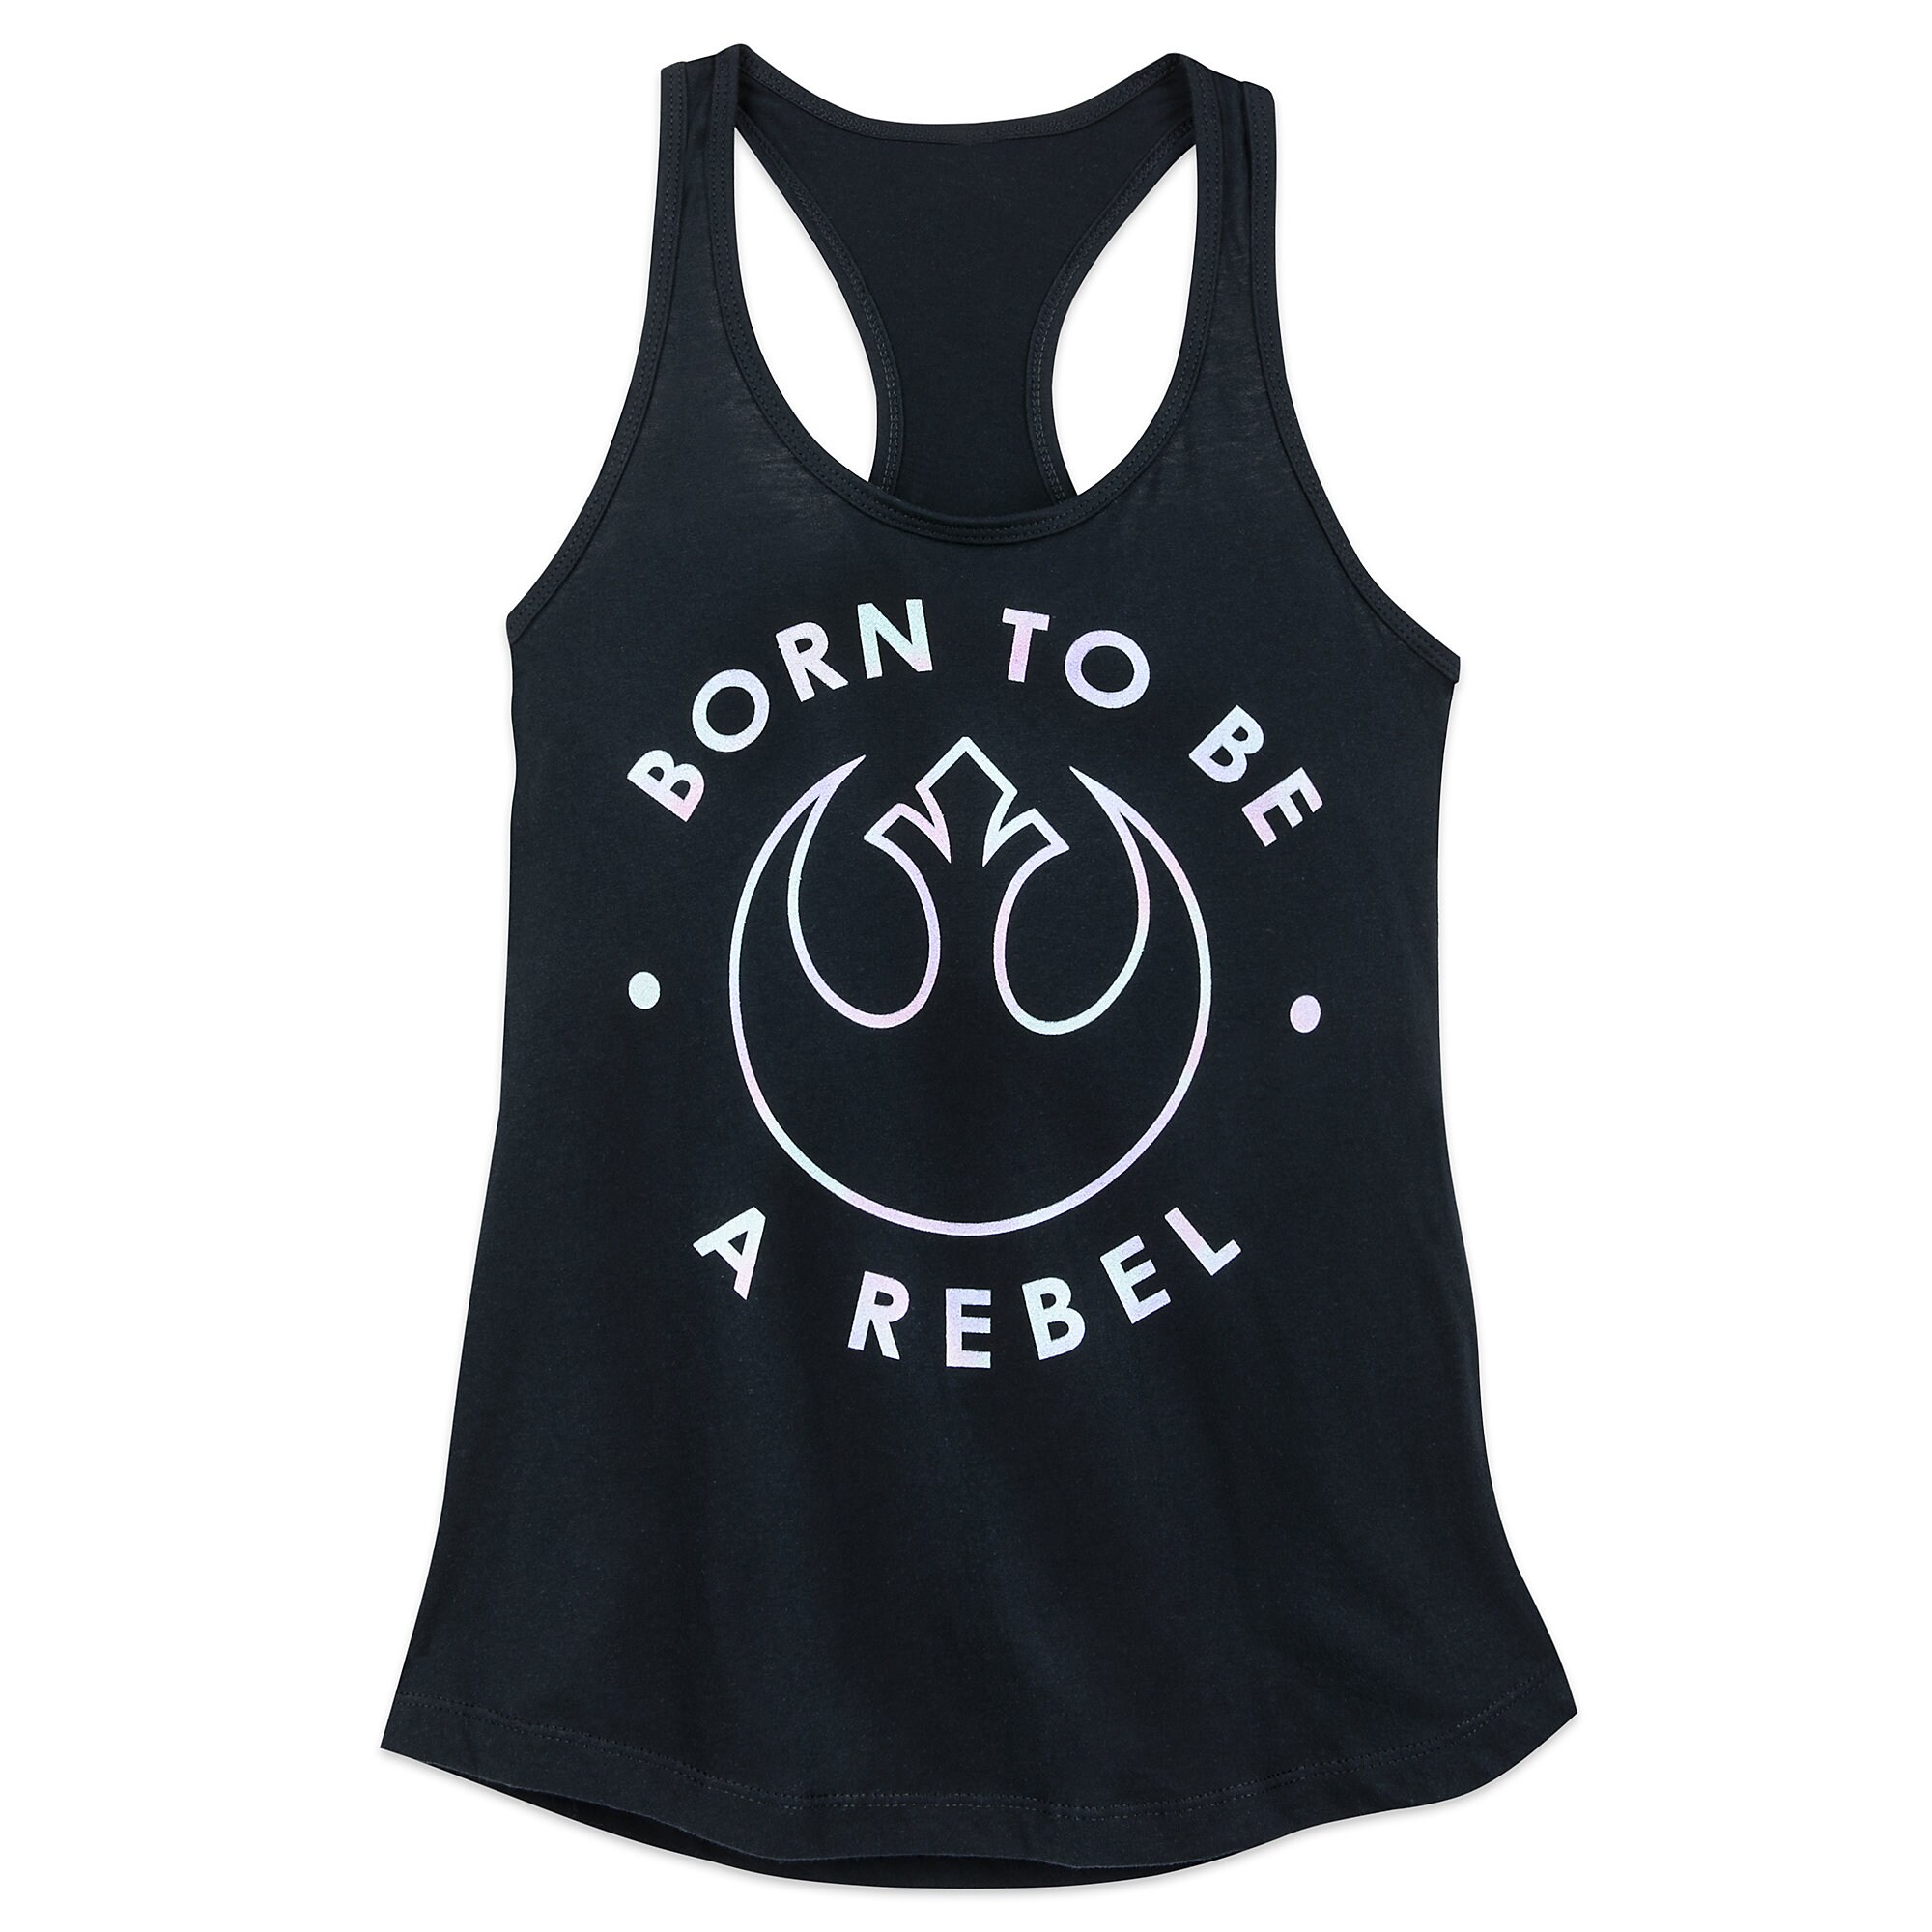 Star Wars Rebel Tank Top for Women